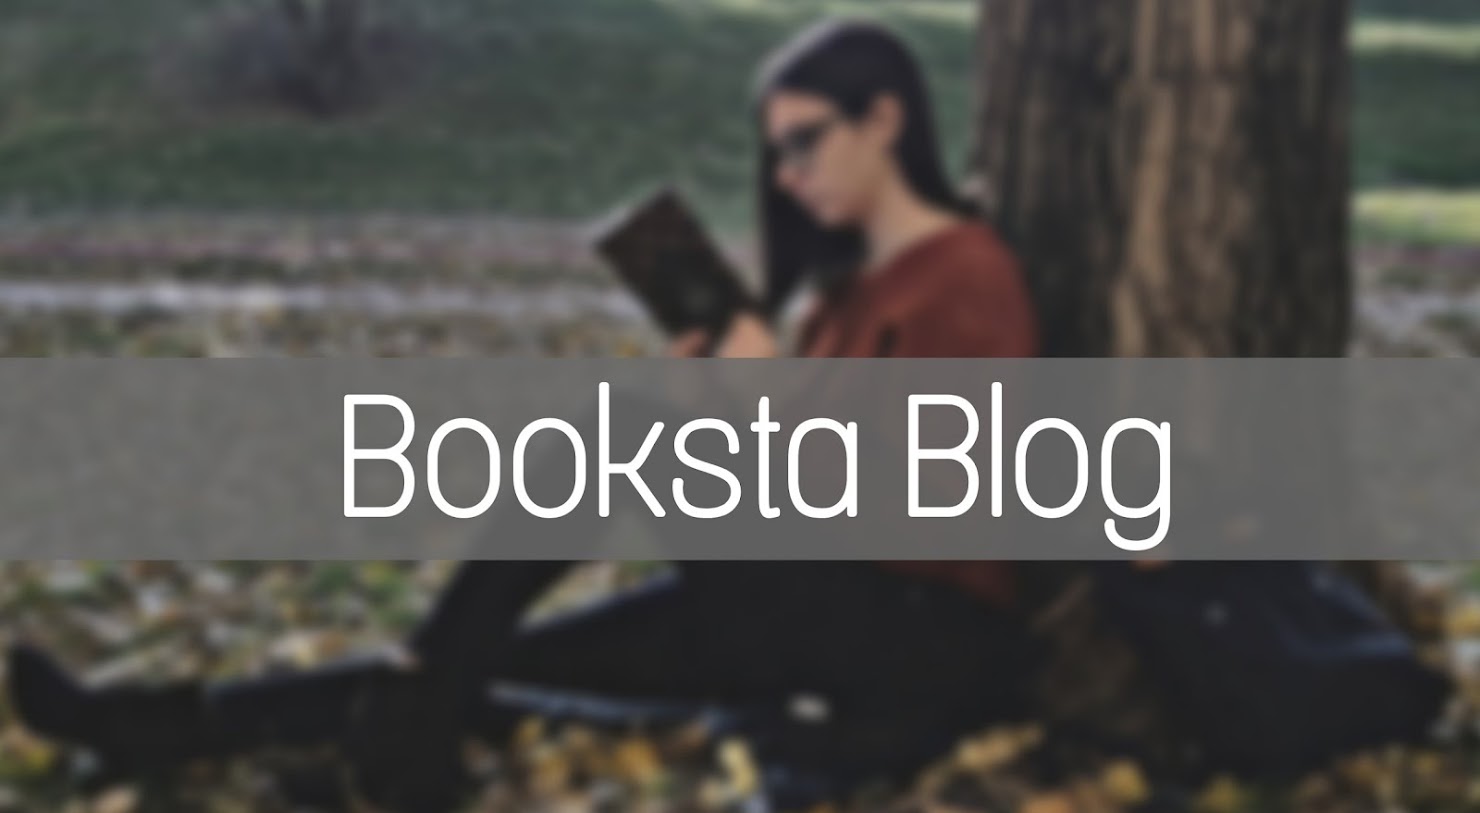 Booksta Blog